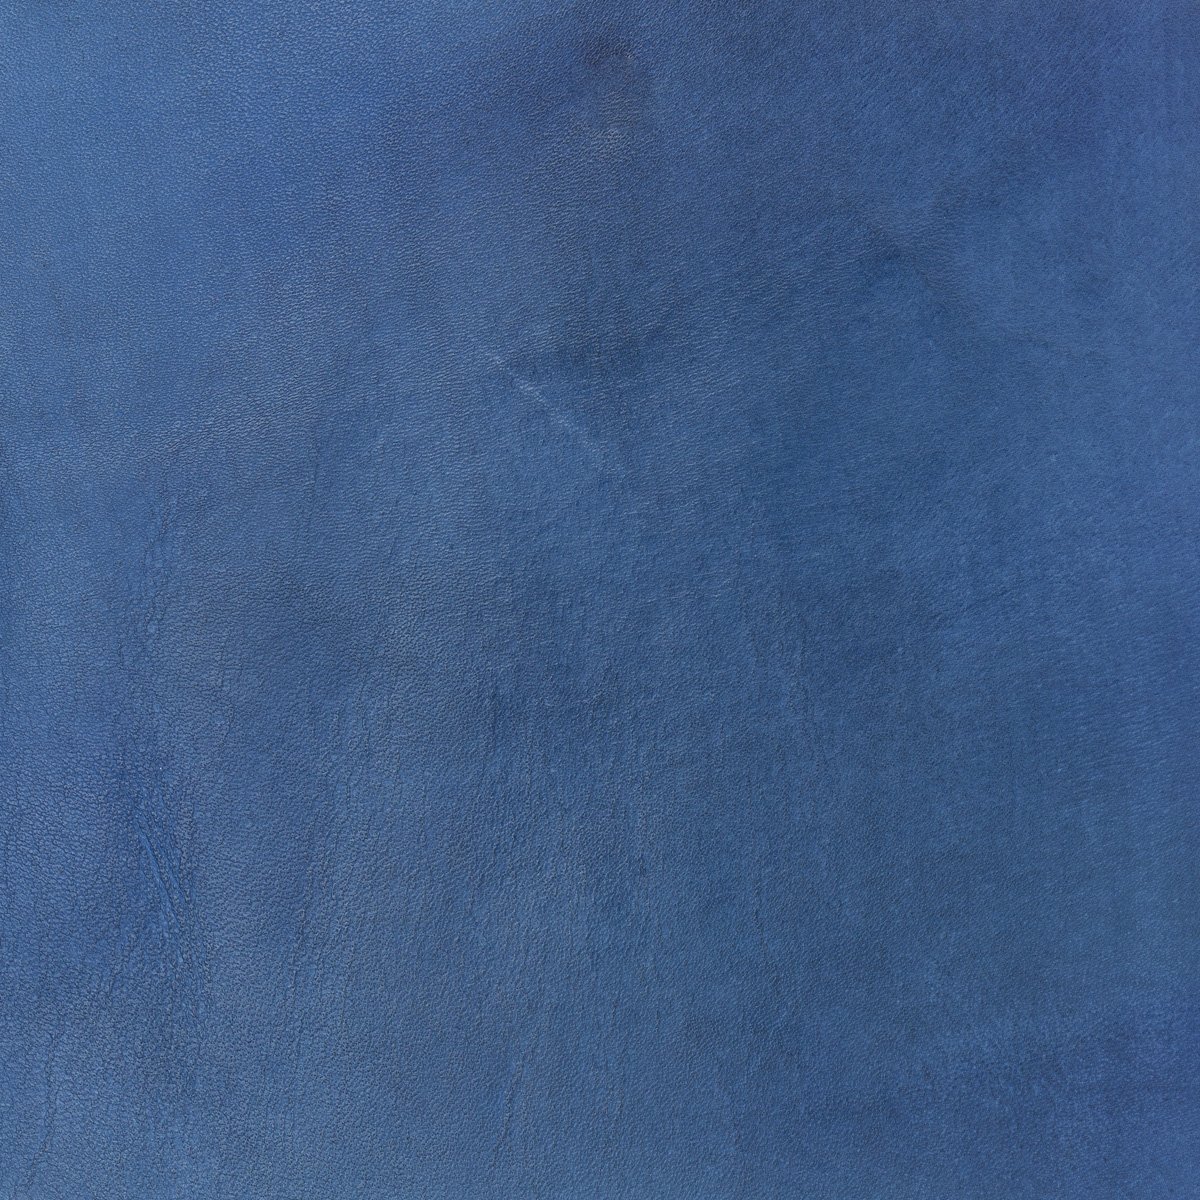 J.FitzPatrick Footwear Shaded Blue Crust Calf Leather